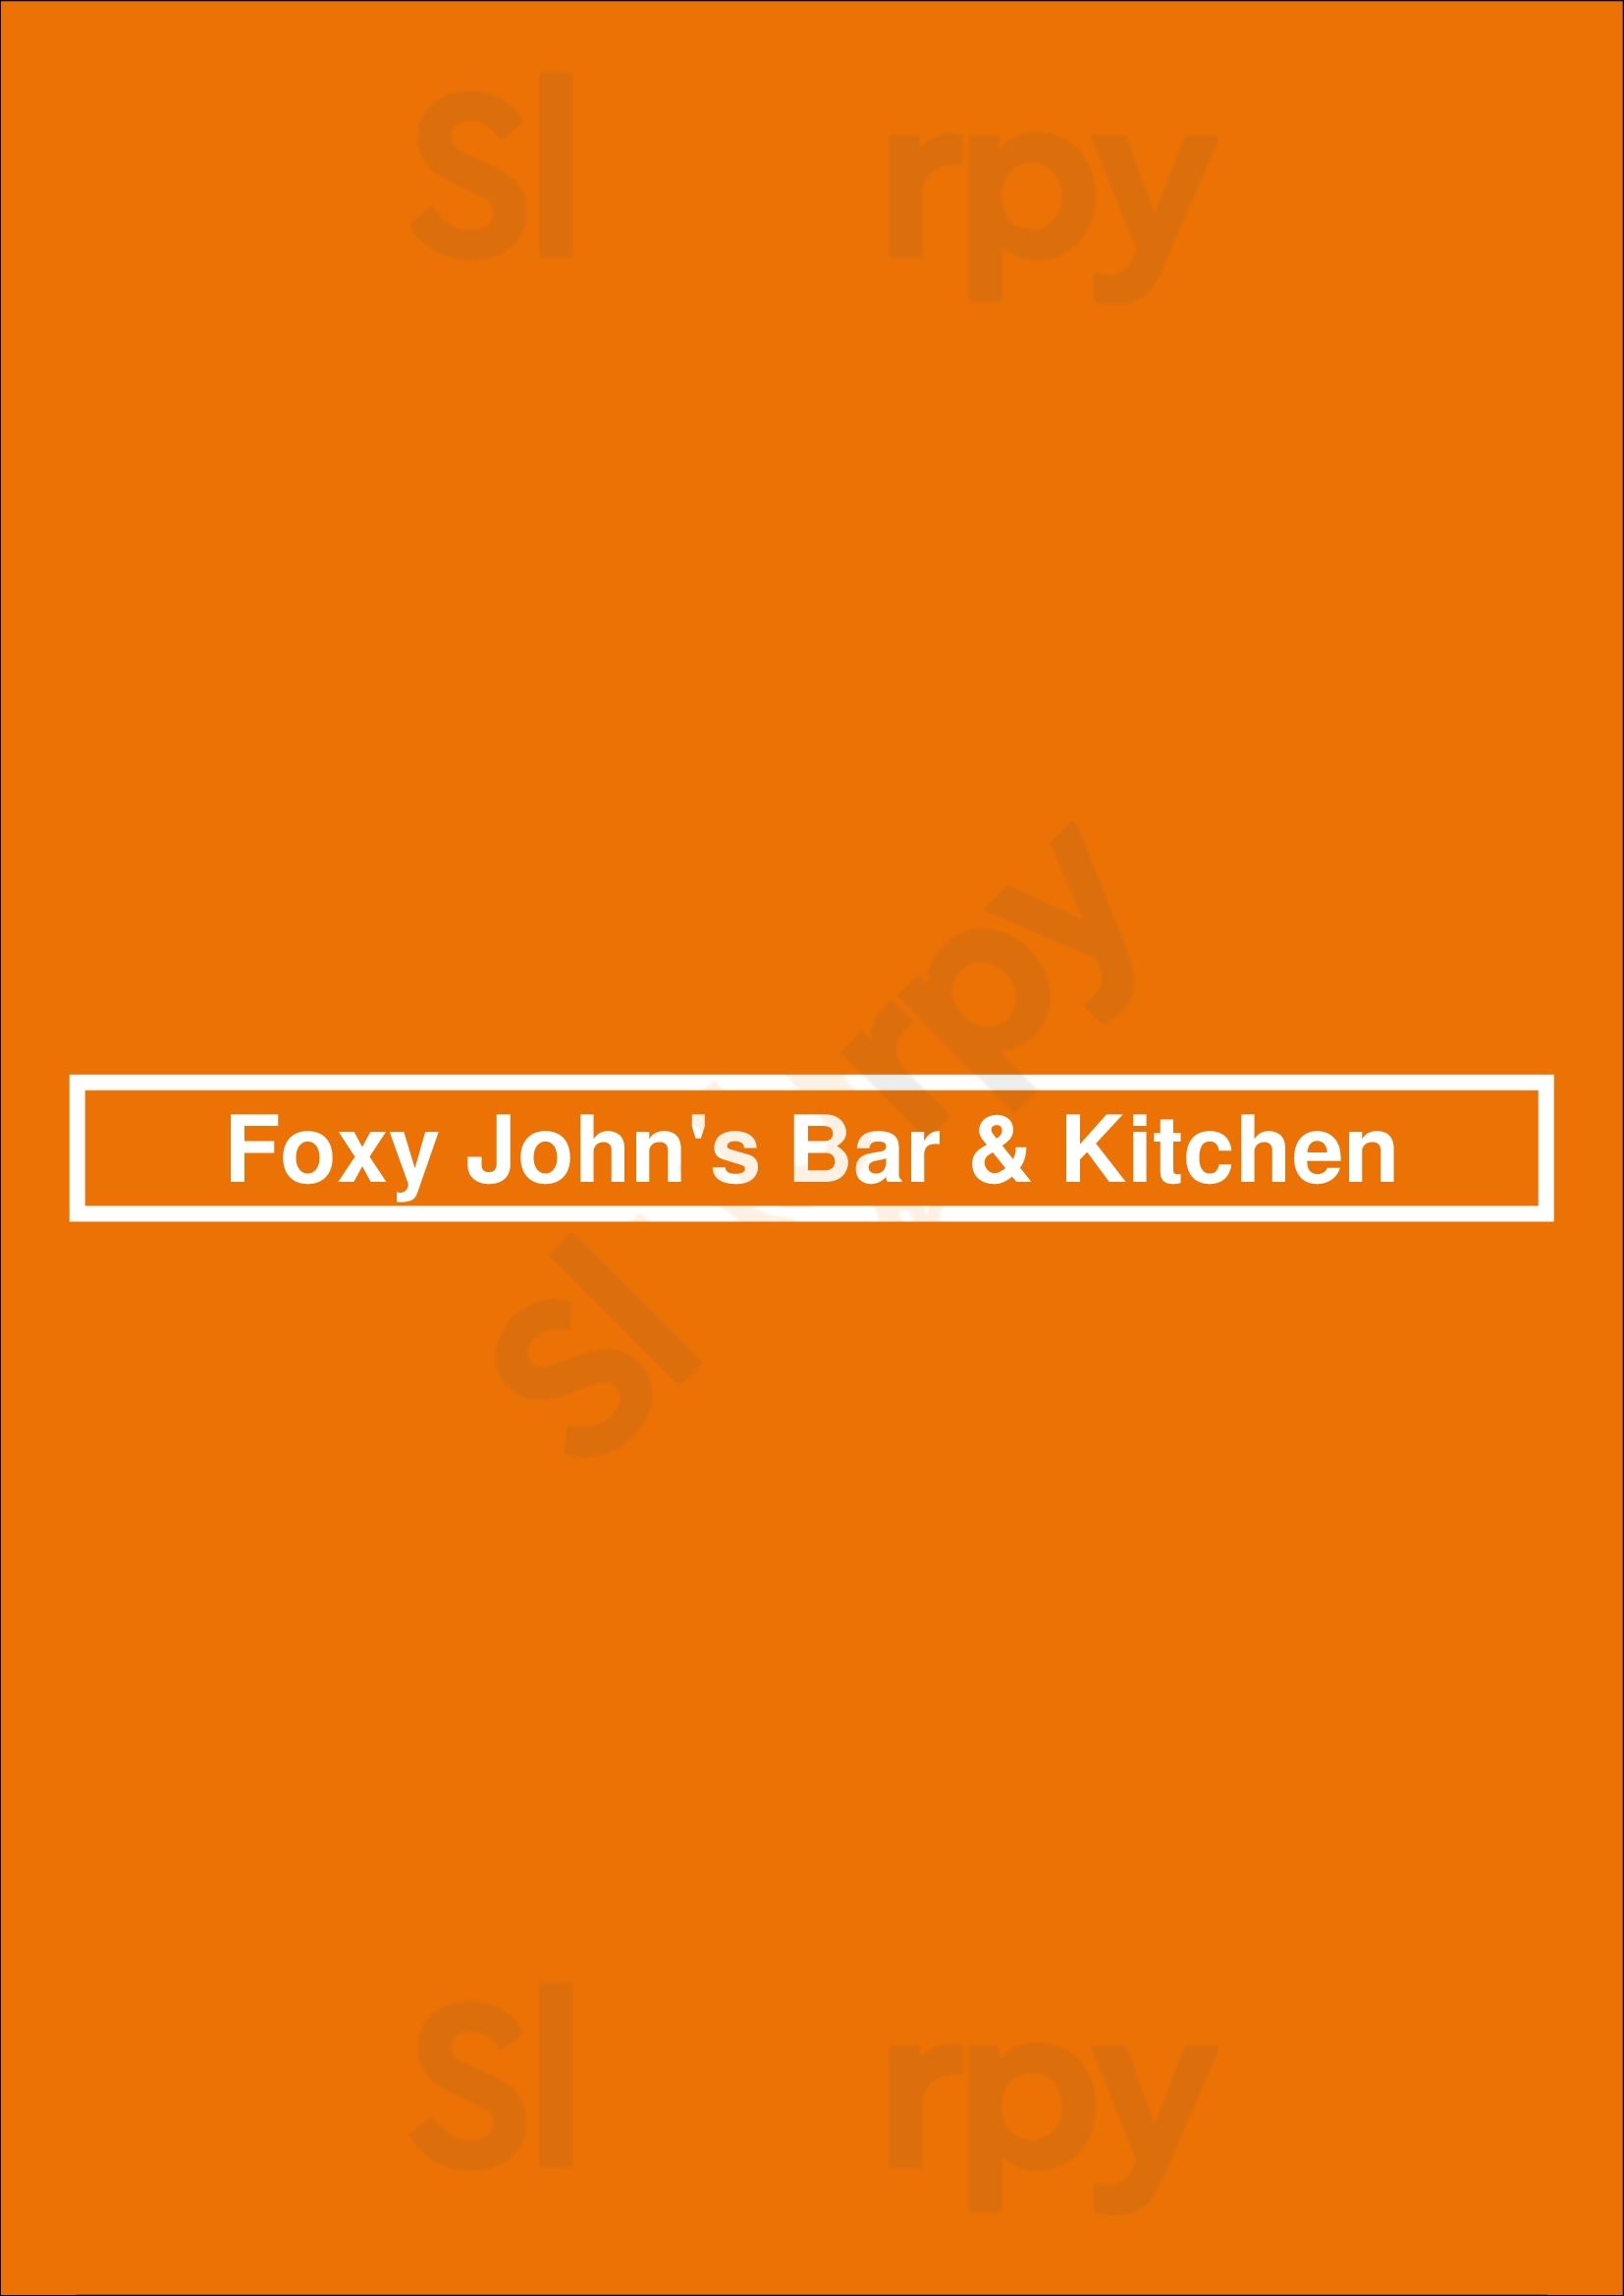 Foxy John's Bar & Kitchen New York City Menu - 1